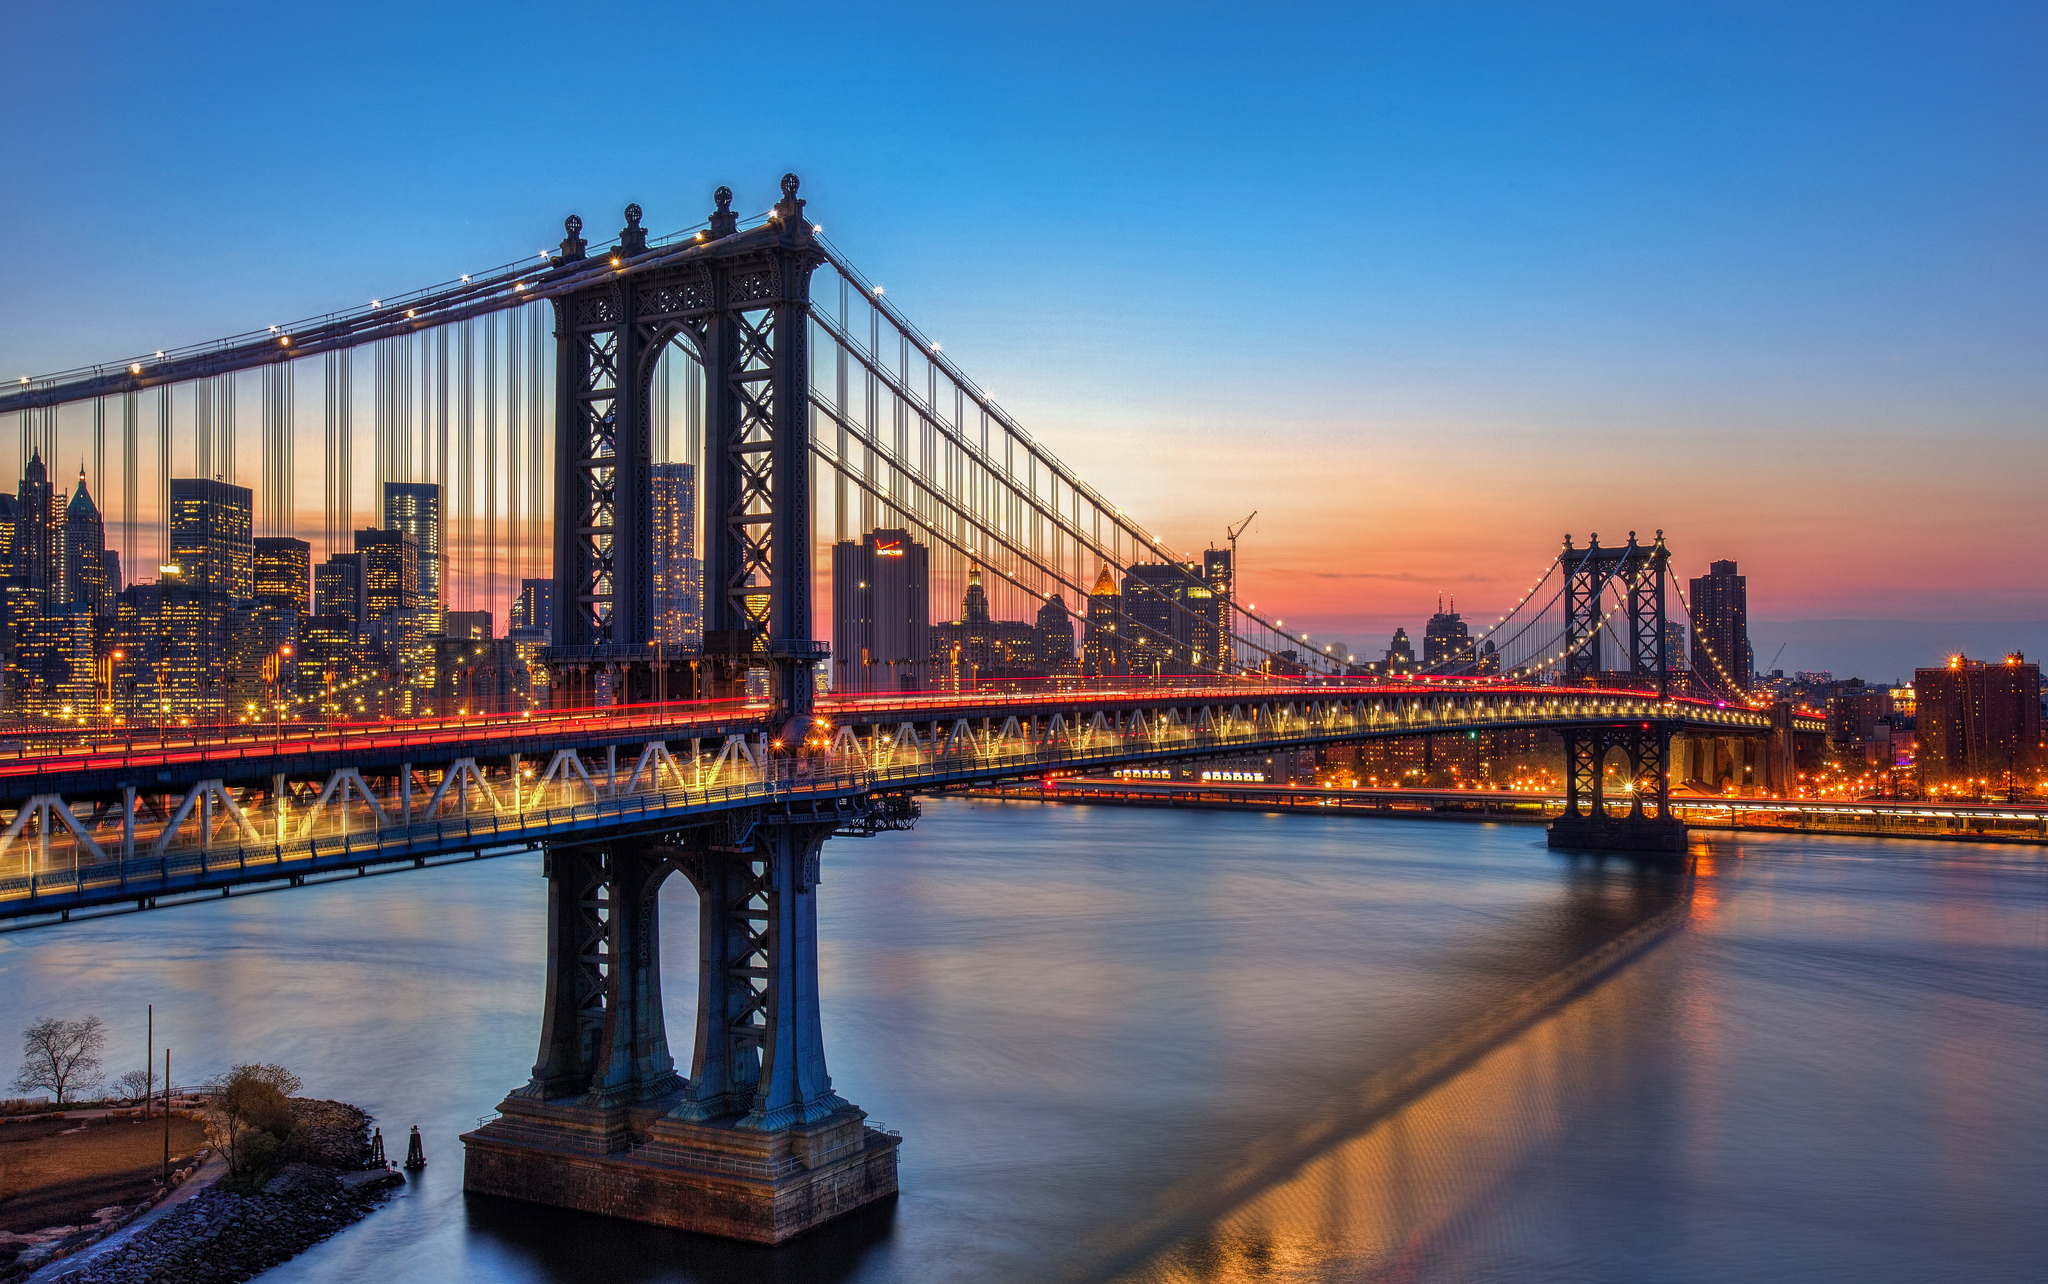 New us ru. Бруклинский мост Нью-Йорк. Манхэттенский мост, Нью-Йорк, США. Нью-Йорк мост Манхэттен закат. Бруклинский мост Манхэттен.